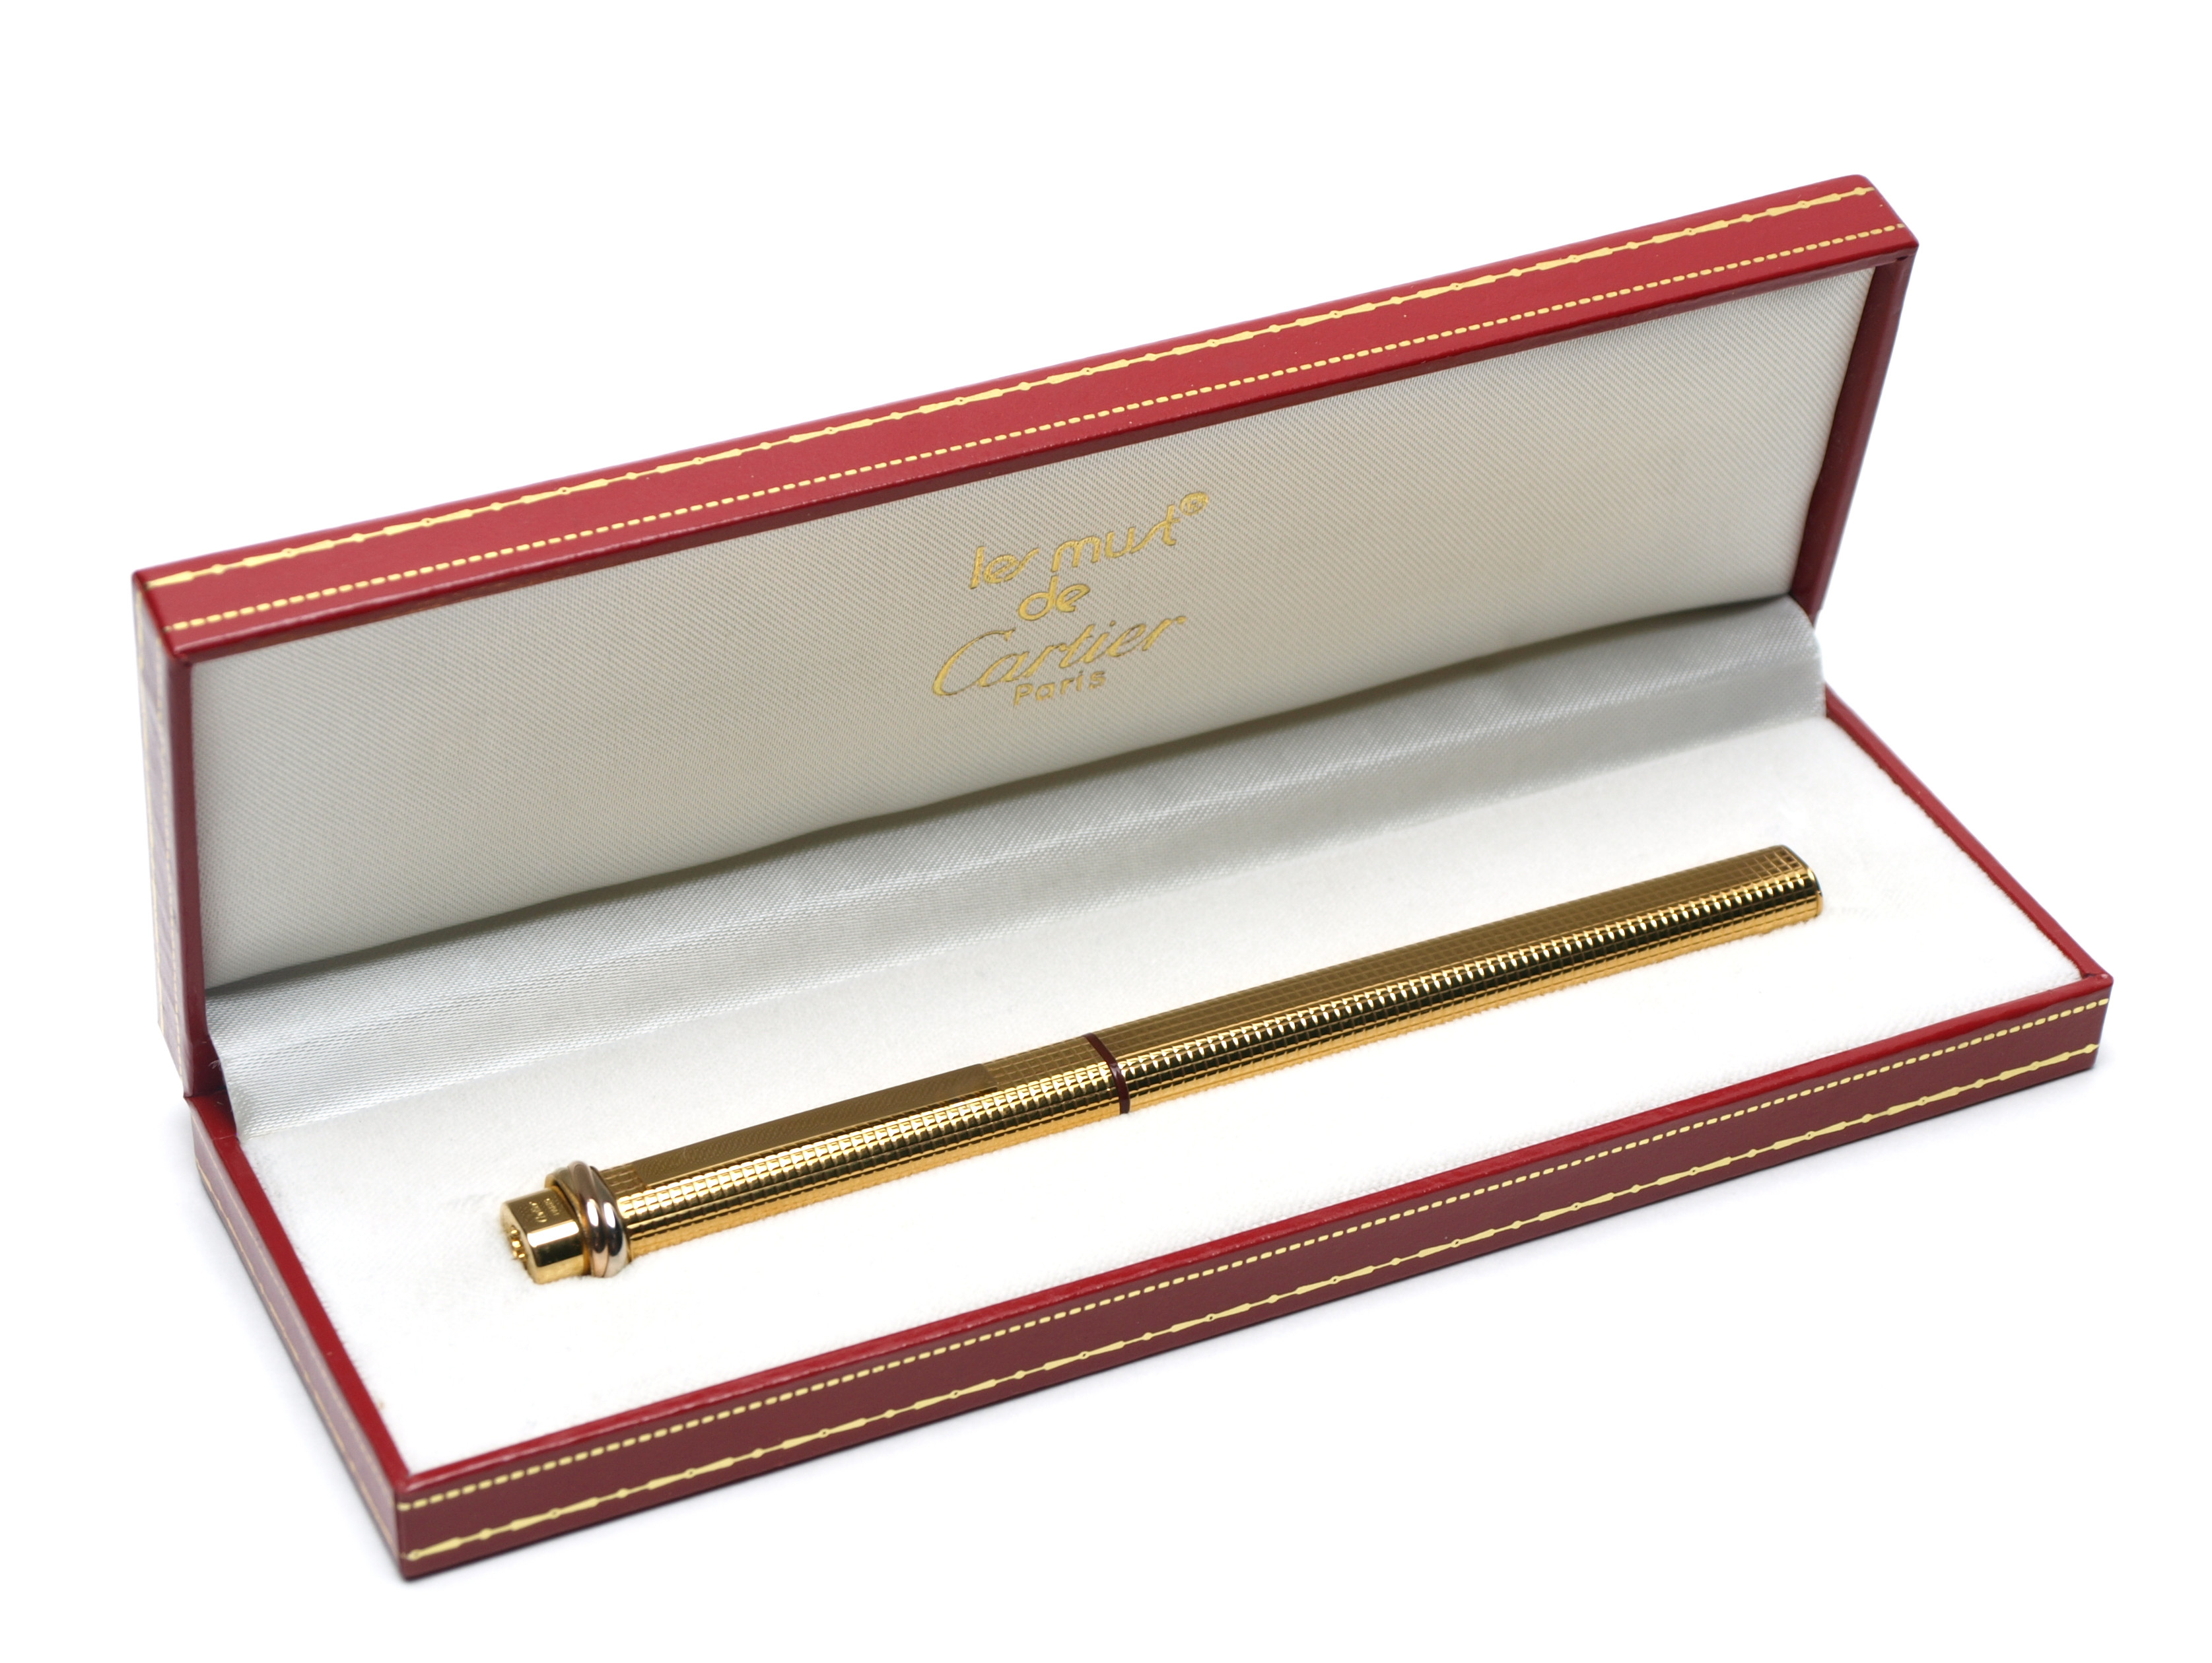 cartier gold pen price